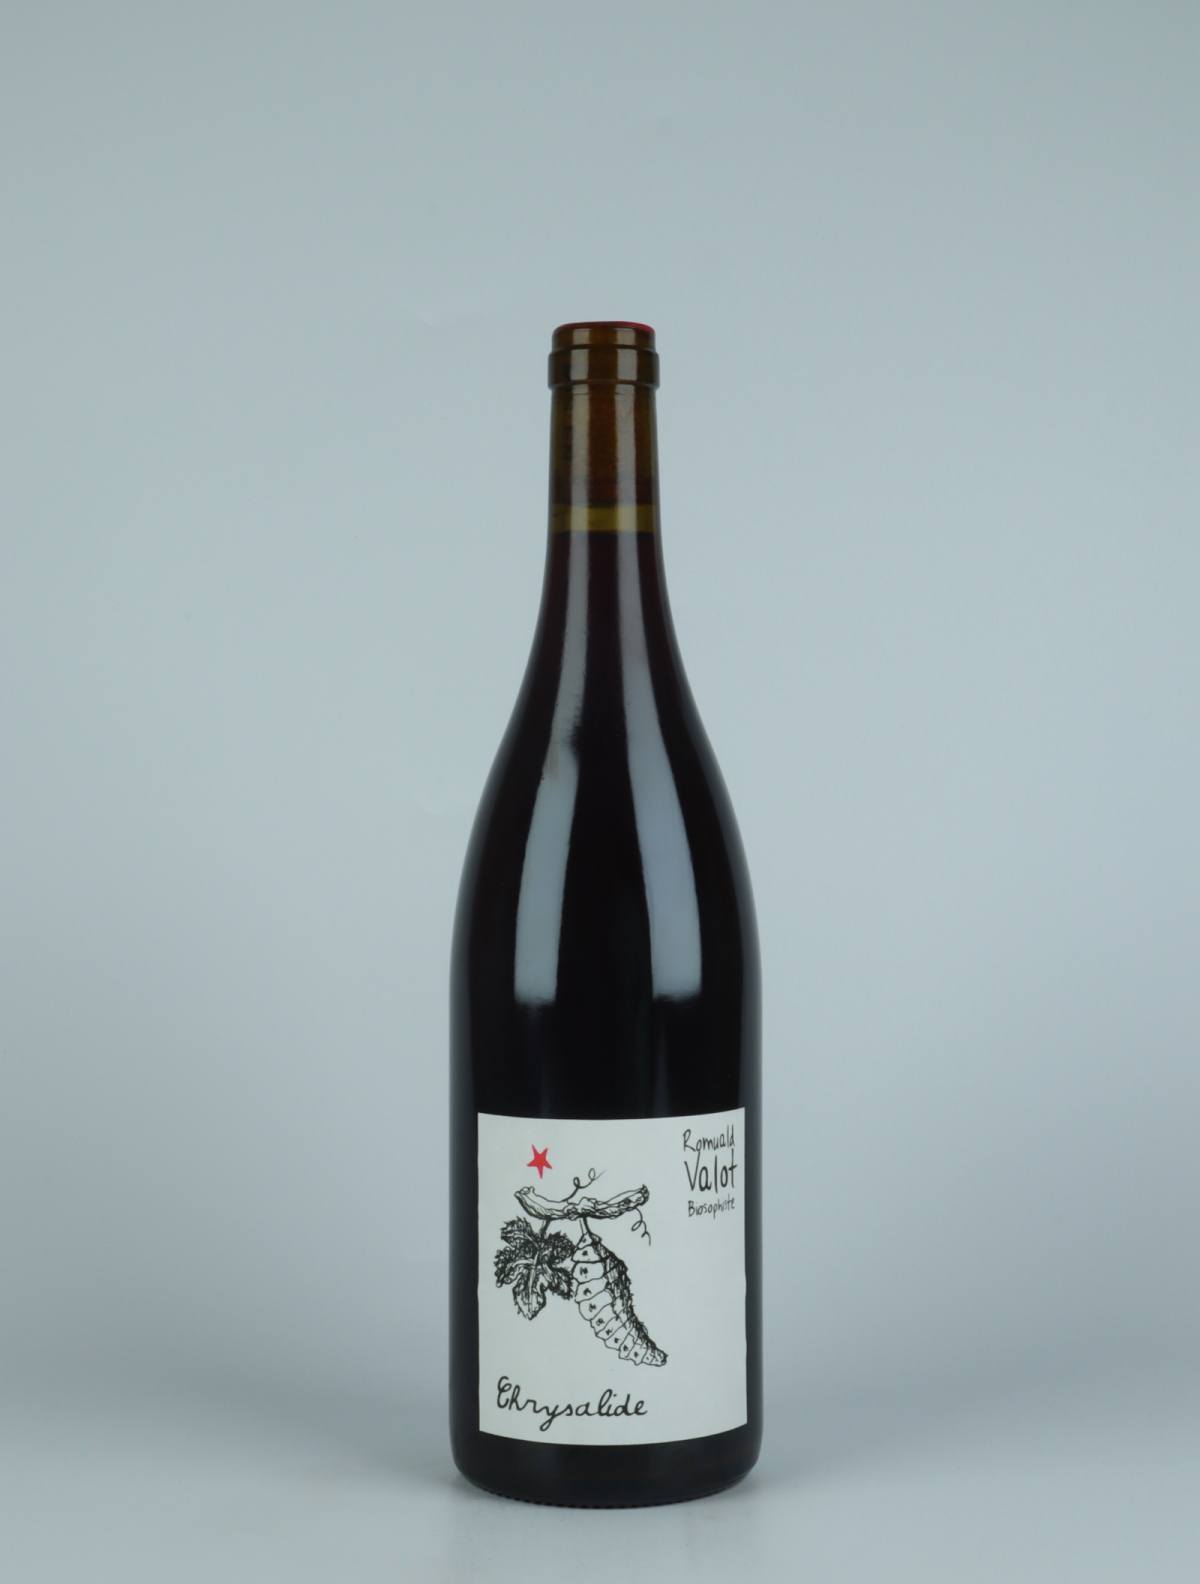 En flaske 2022 Chrysalide Rødvin fra Romuald Valot, Beaujolais i Frankrig